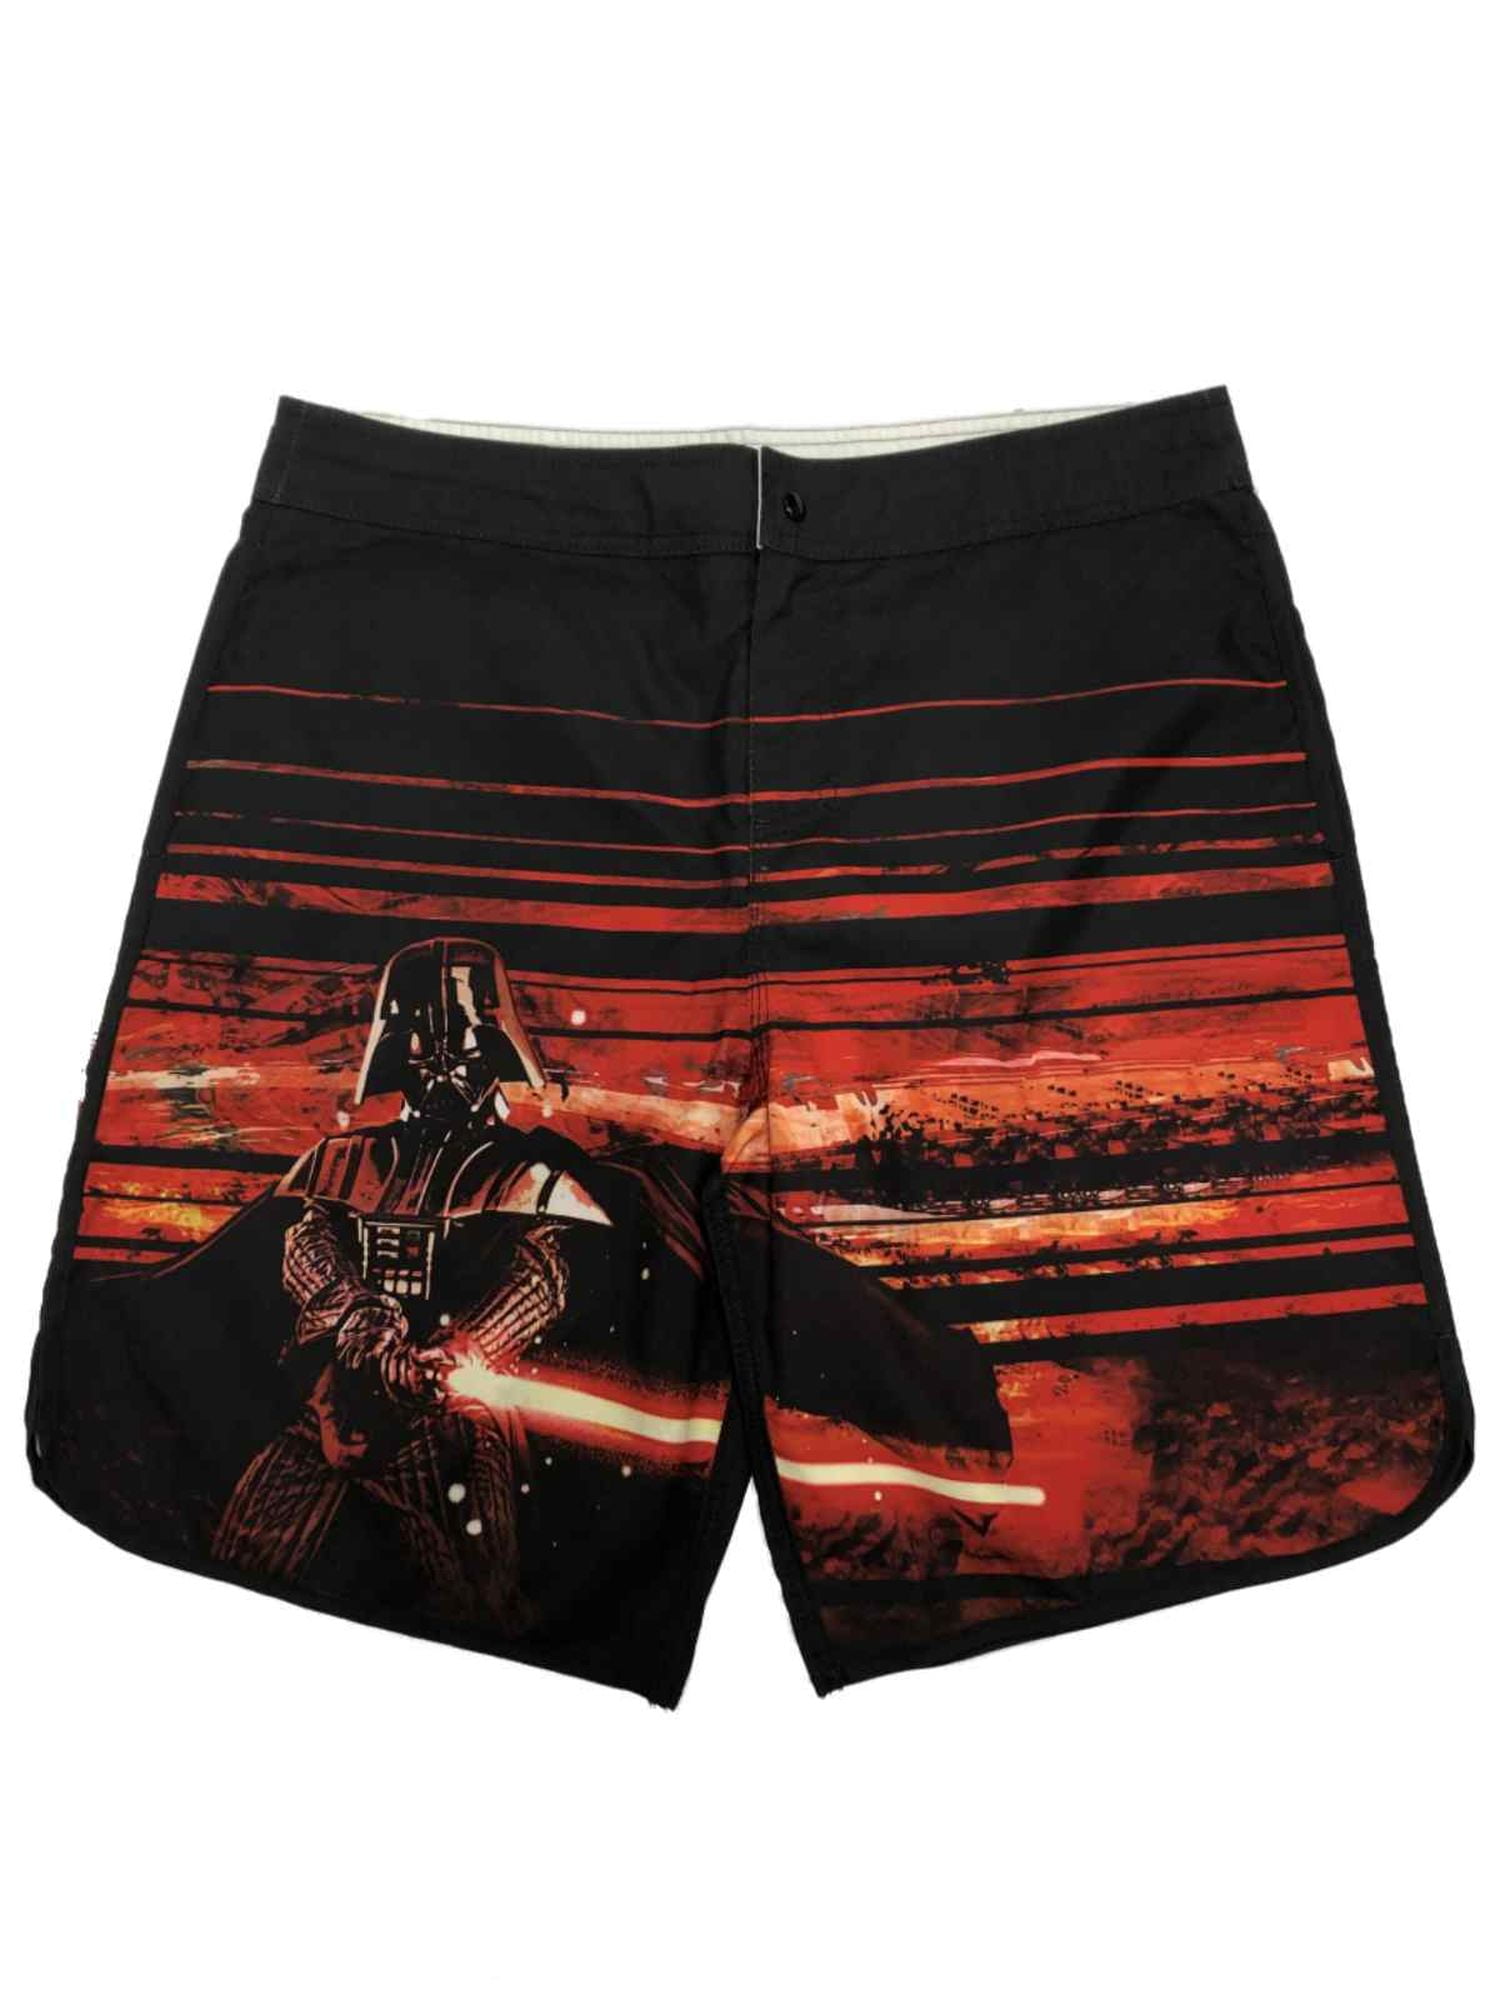 Star Wars Darth Vader Iconic Pattern Mens Black Polyester Swim Shorts Trunks 